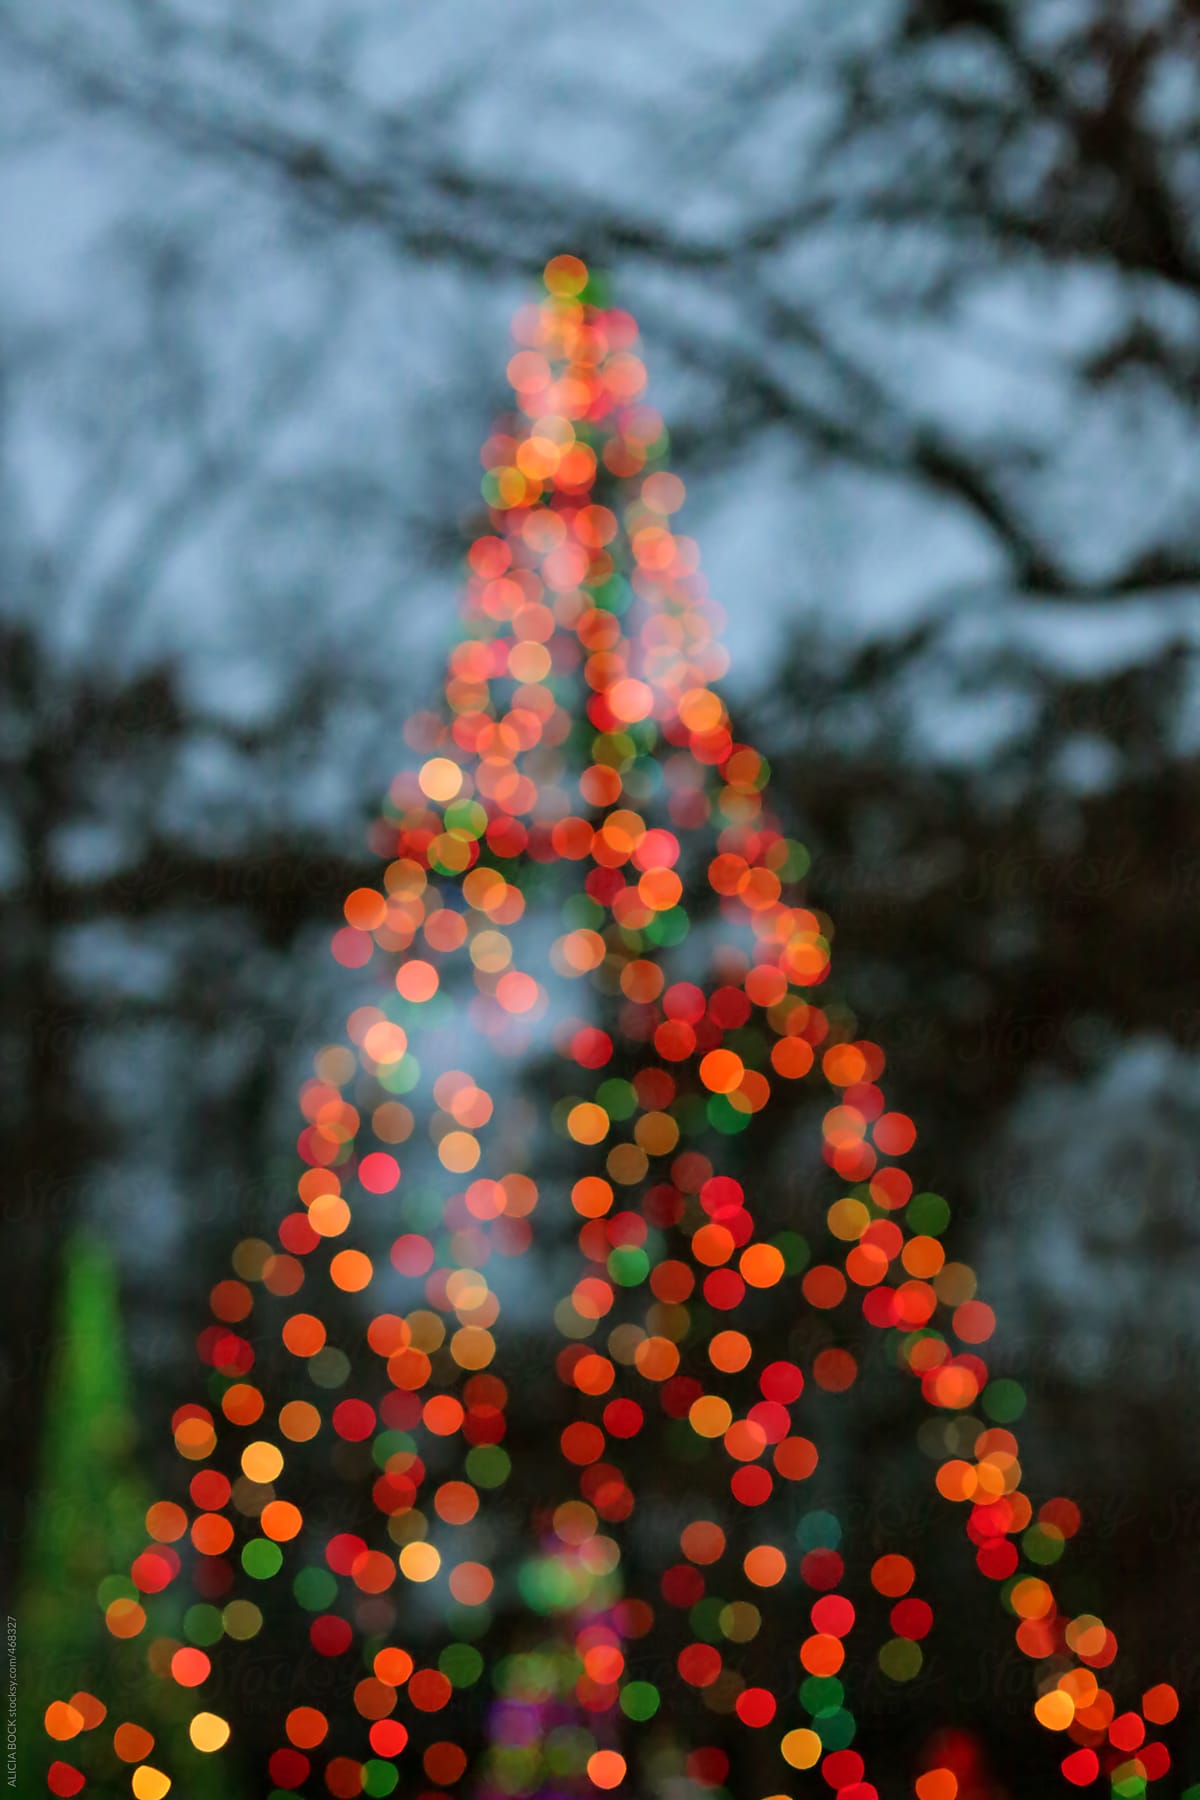 A Holiday Tree Made Of Lights